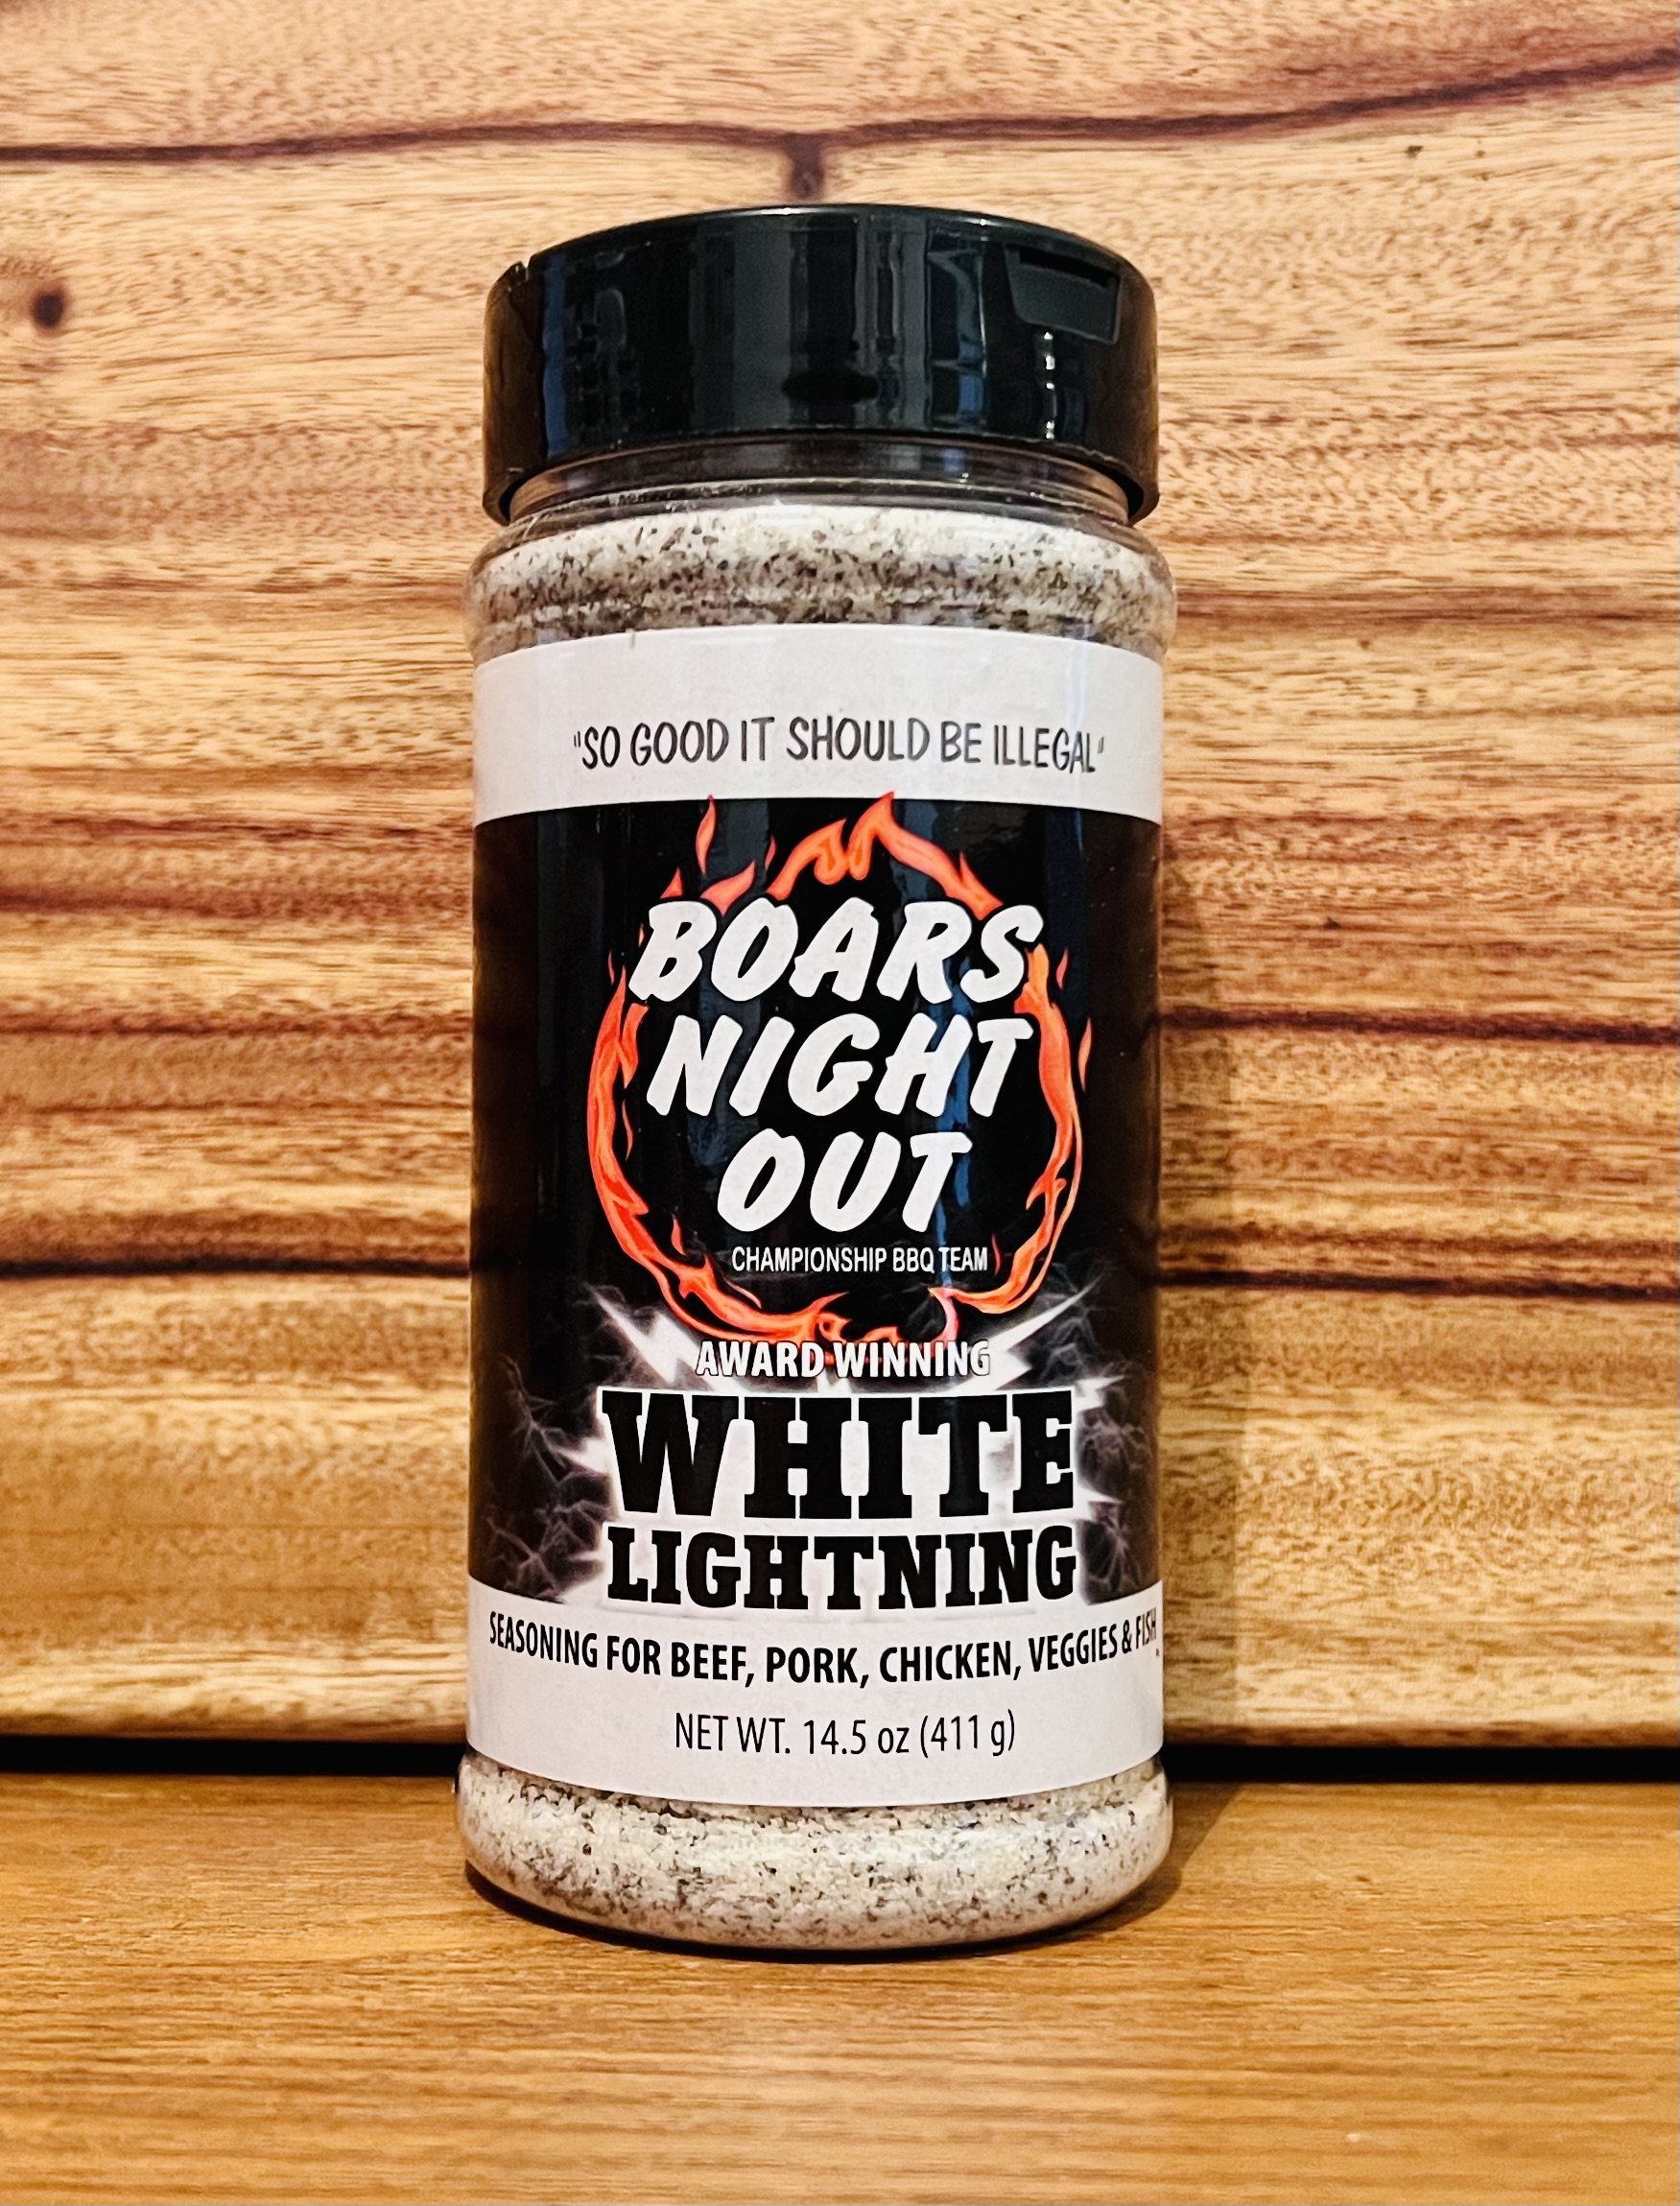 Boars Night Out White Lightning BBQ Rub - 14.5 oz.